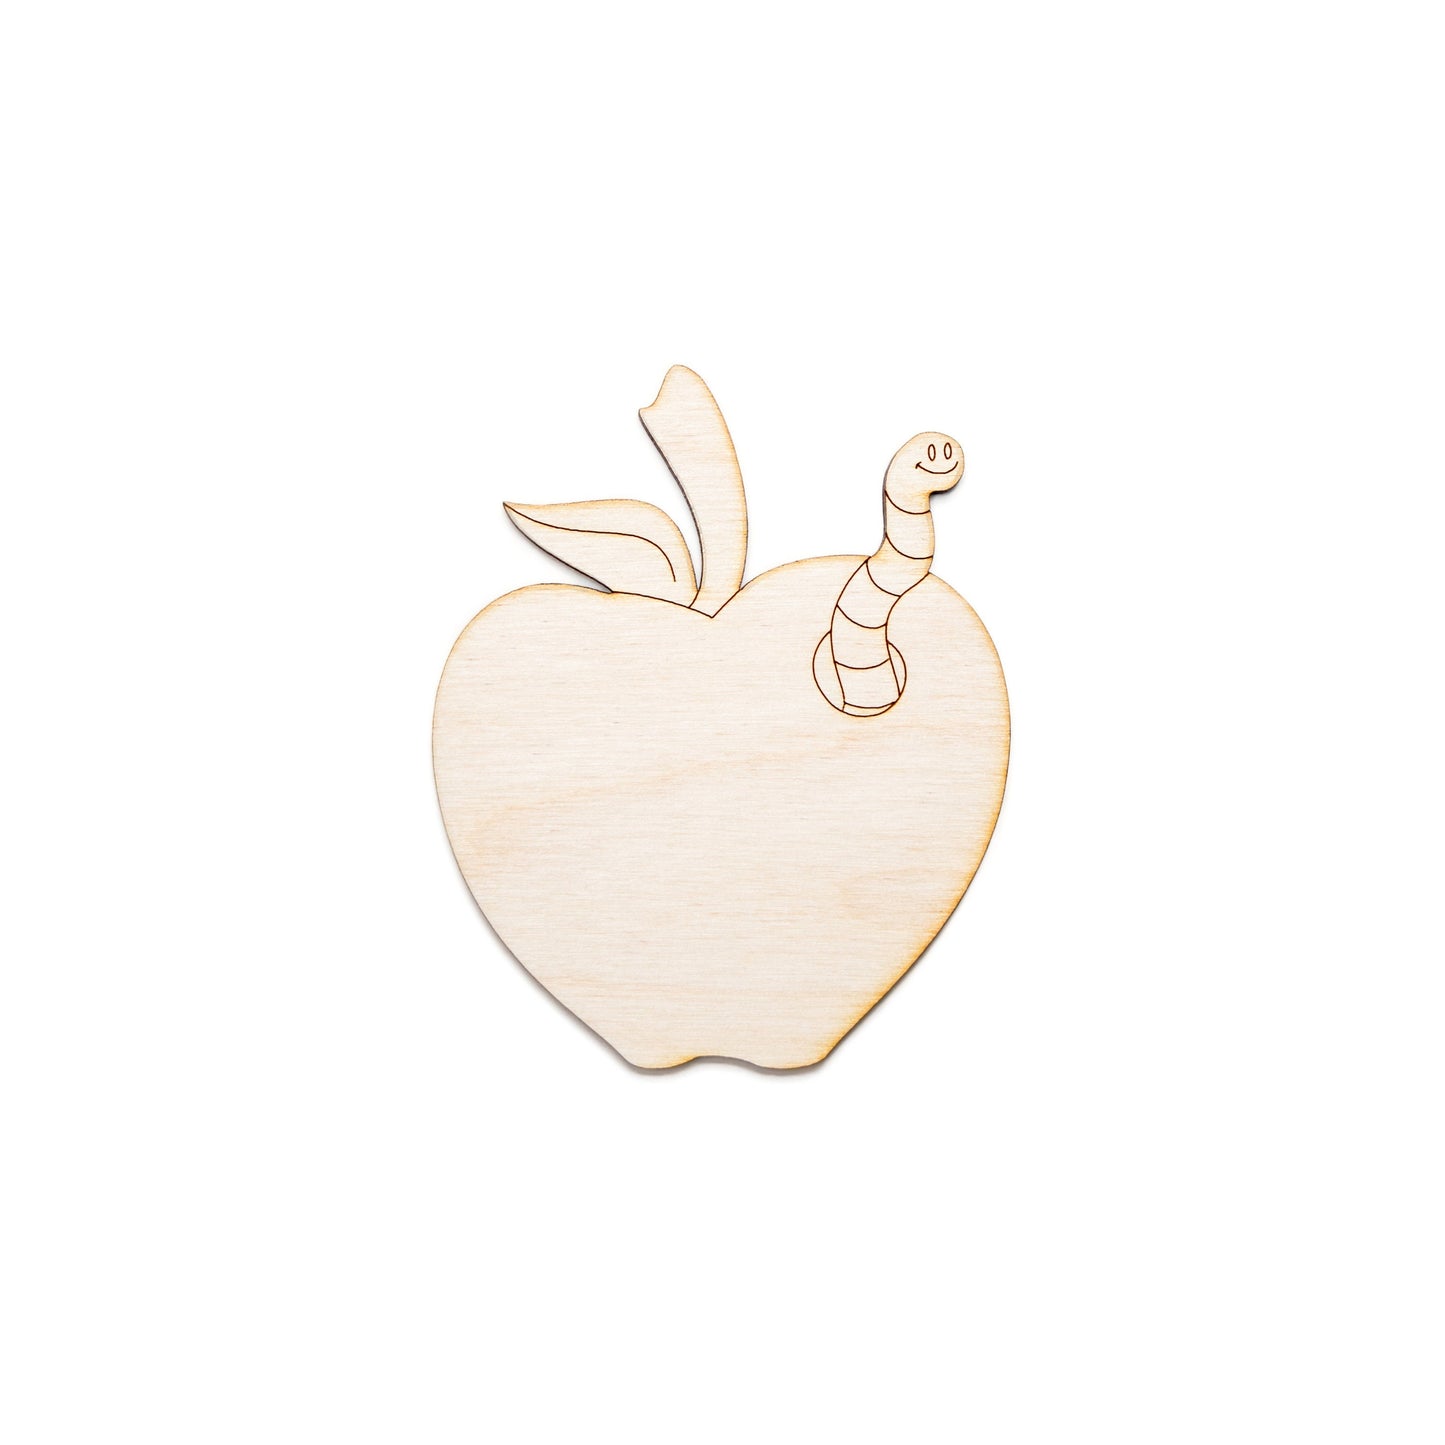 Apple With Worm Detail Line Etch-Wood Cutout-Cute Apple Decor-Various Sizes-DIY Crafts-Classroom Decor-Fruit Wood Shapes-Apple Theme Decor